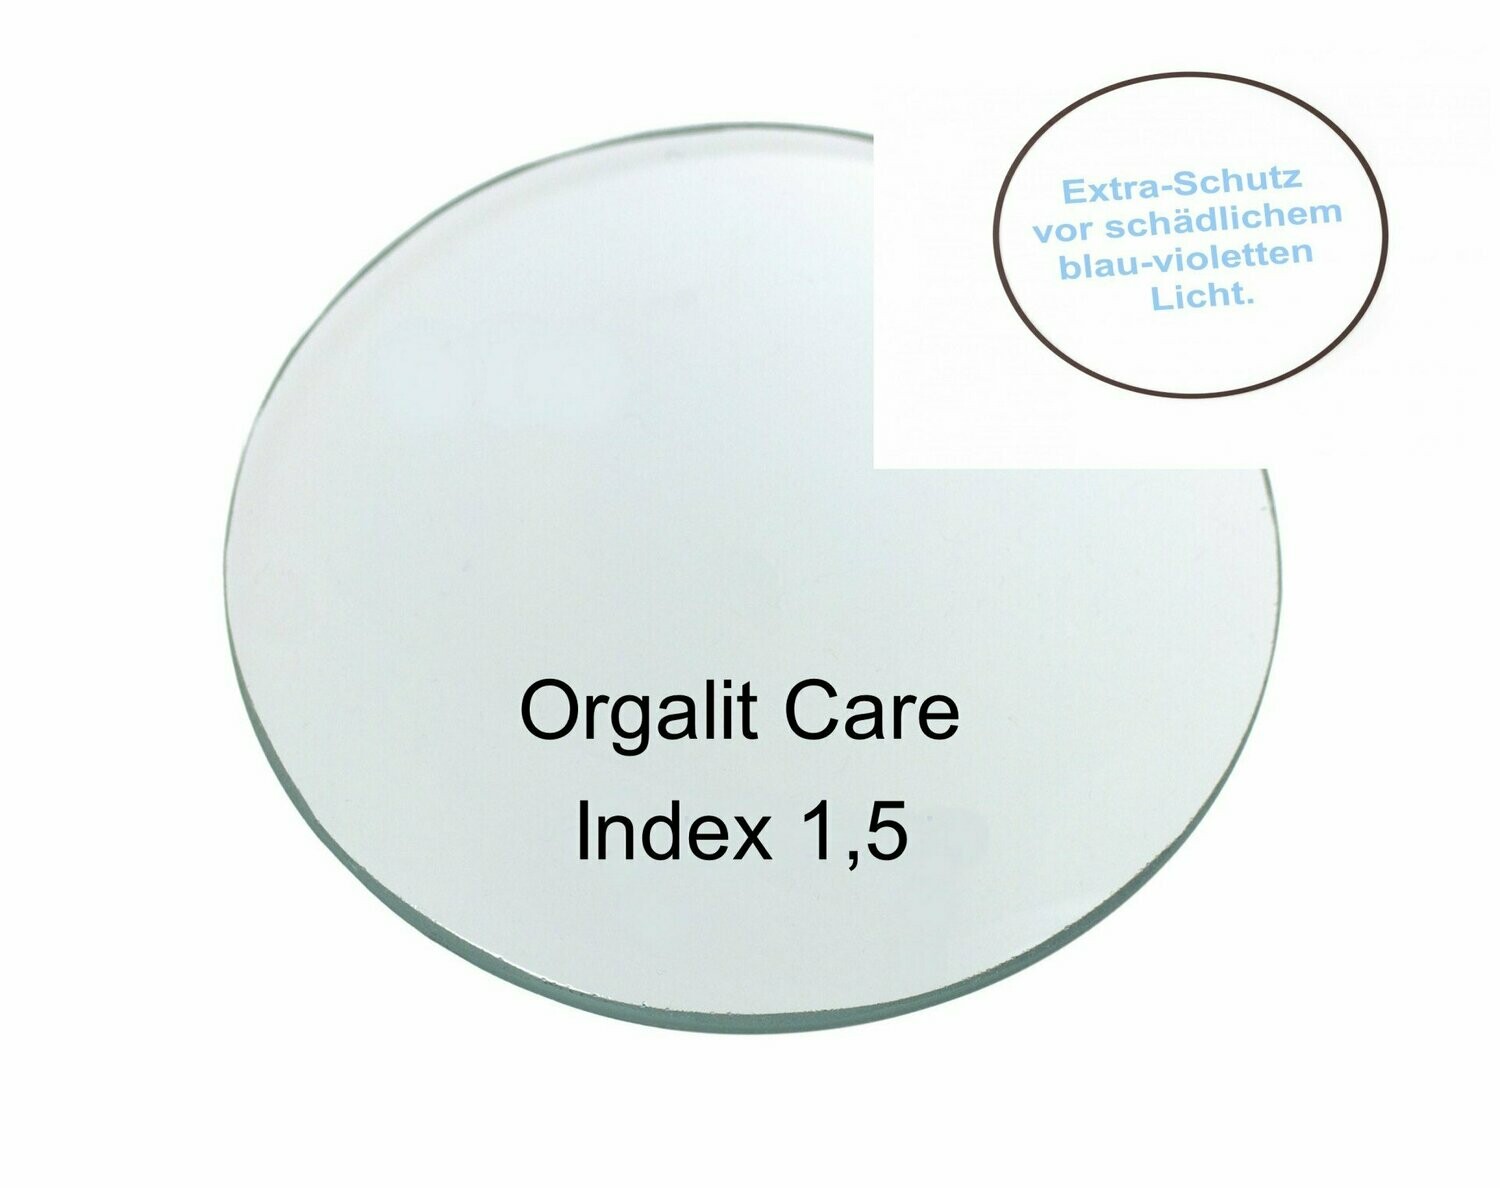 Einstärken Kunststoffglaspaar Orgalit Care Index 1,5 HSET